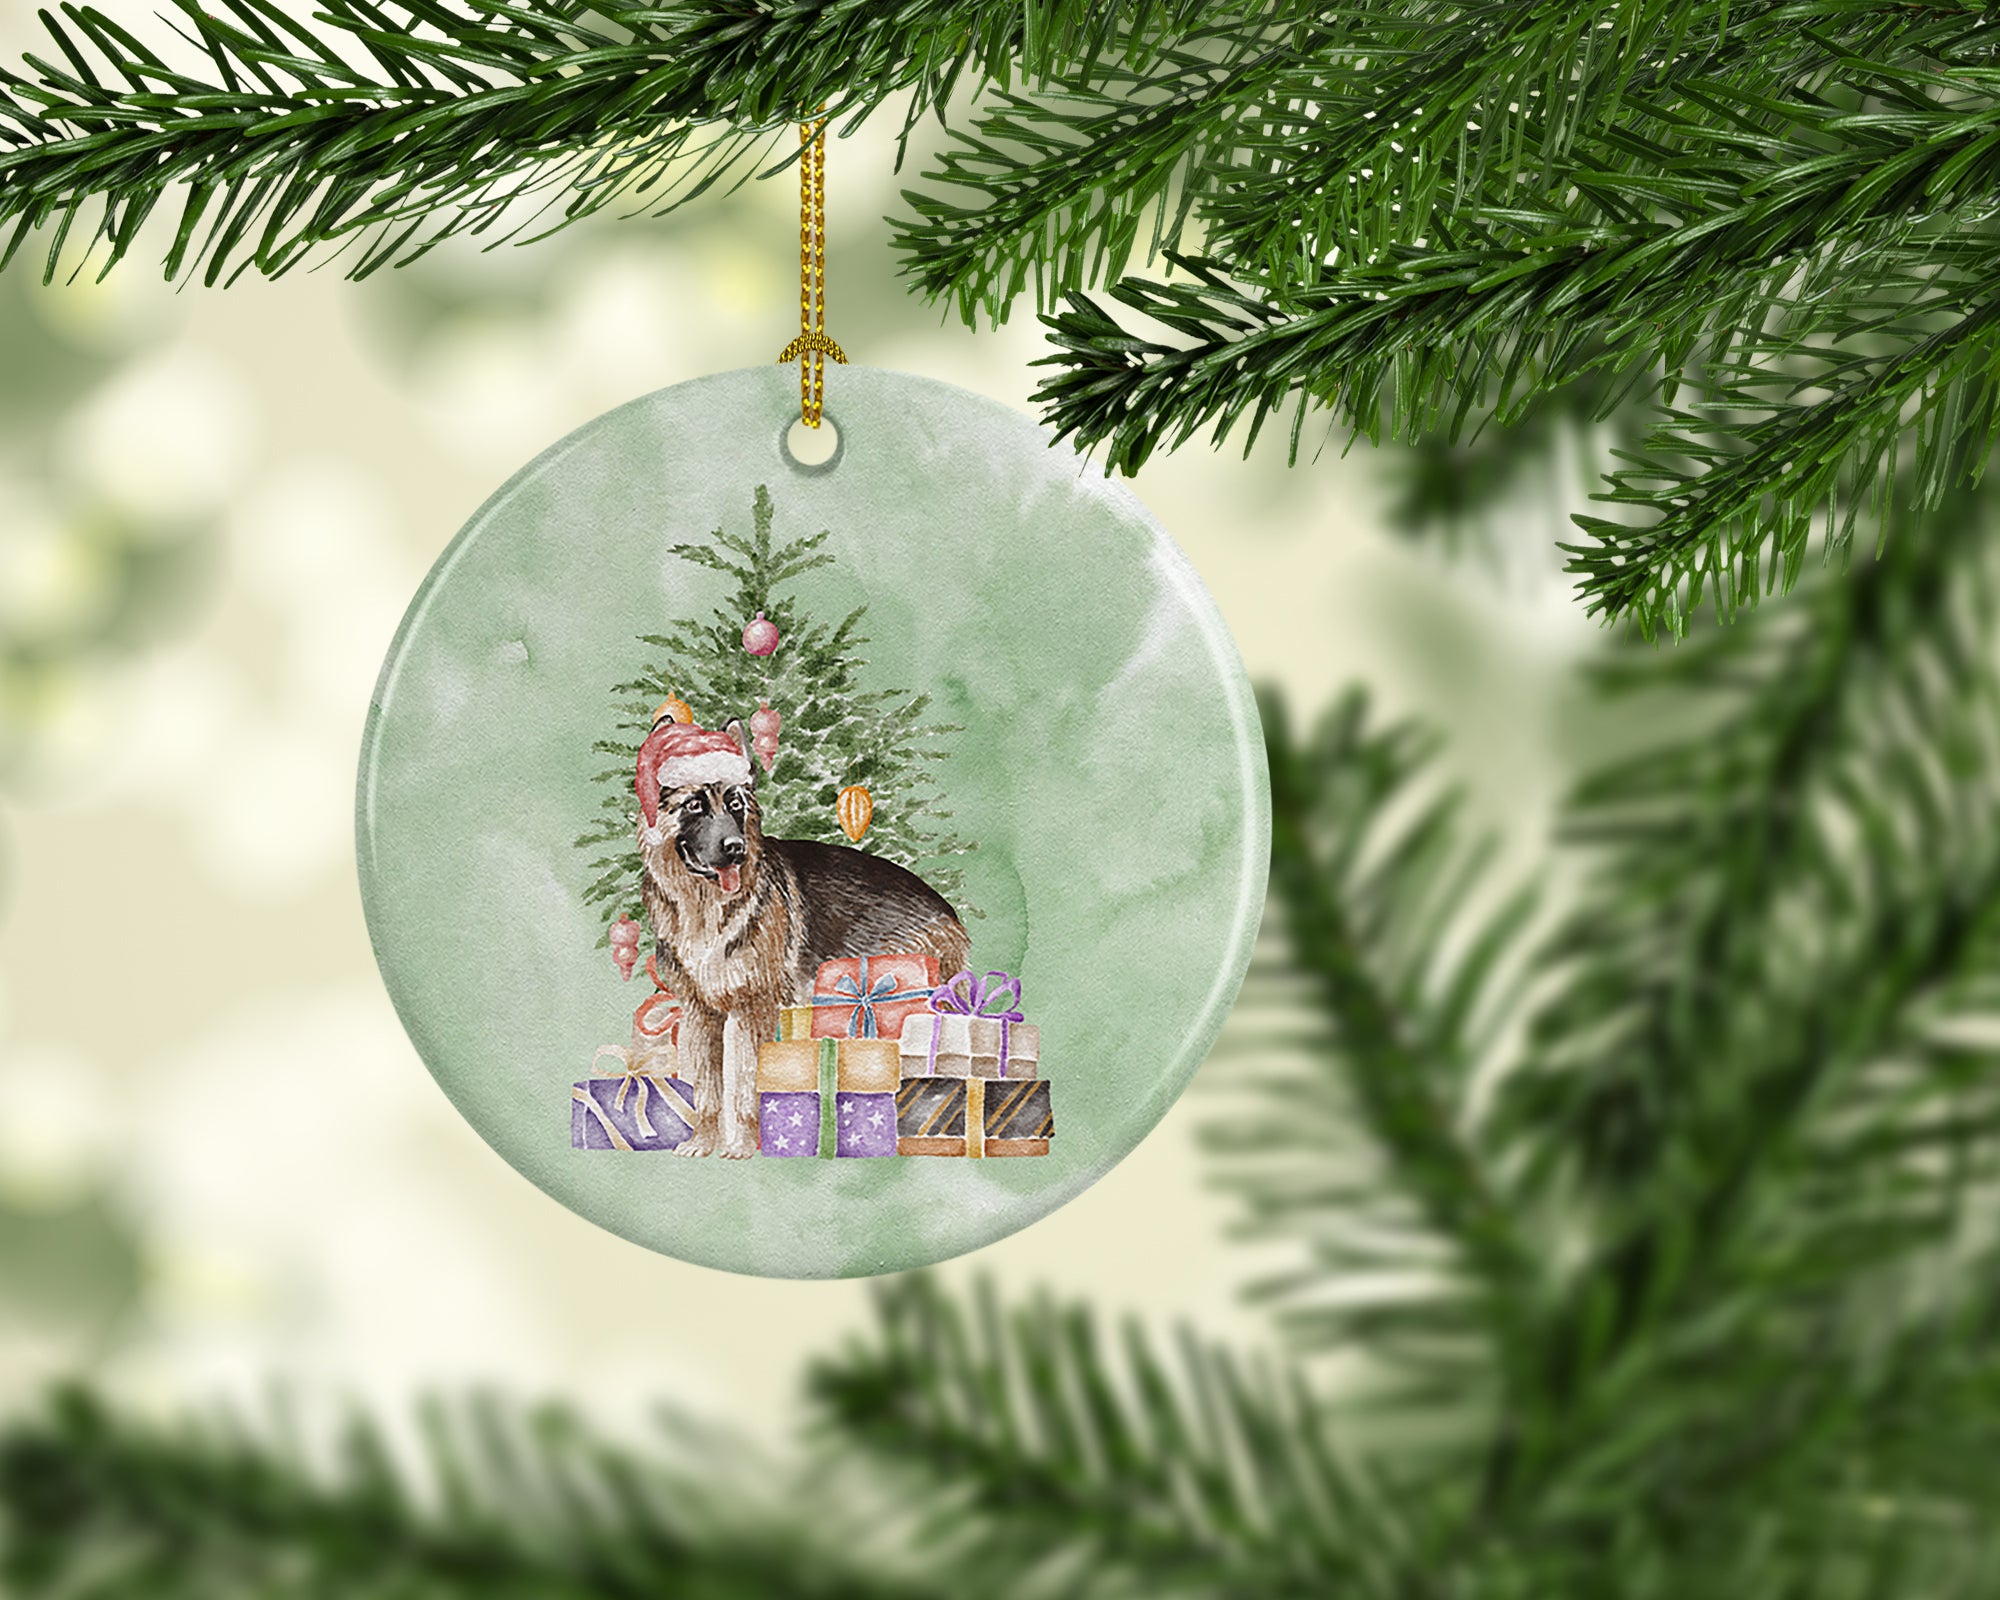 Buy this Christmas German Shepherd Ceramic Ornament